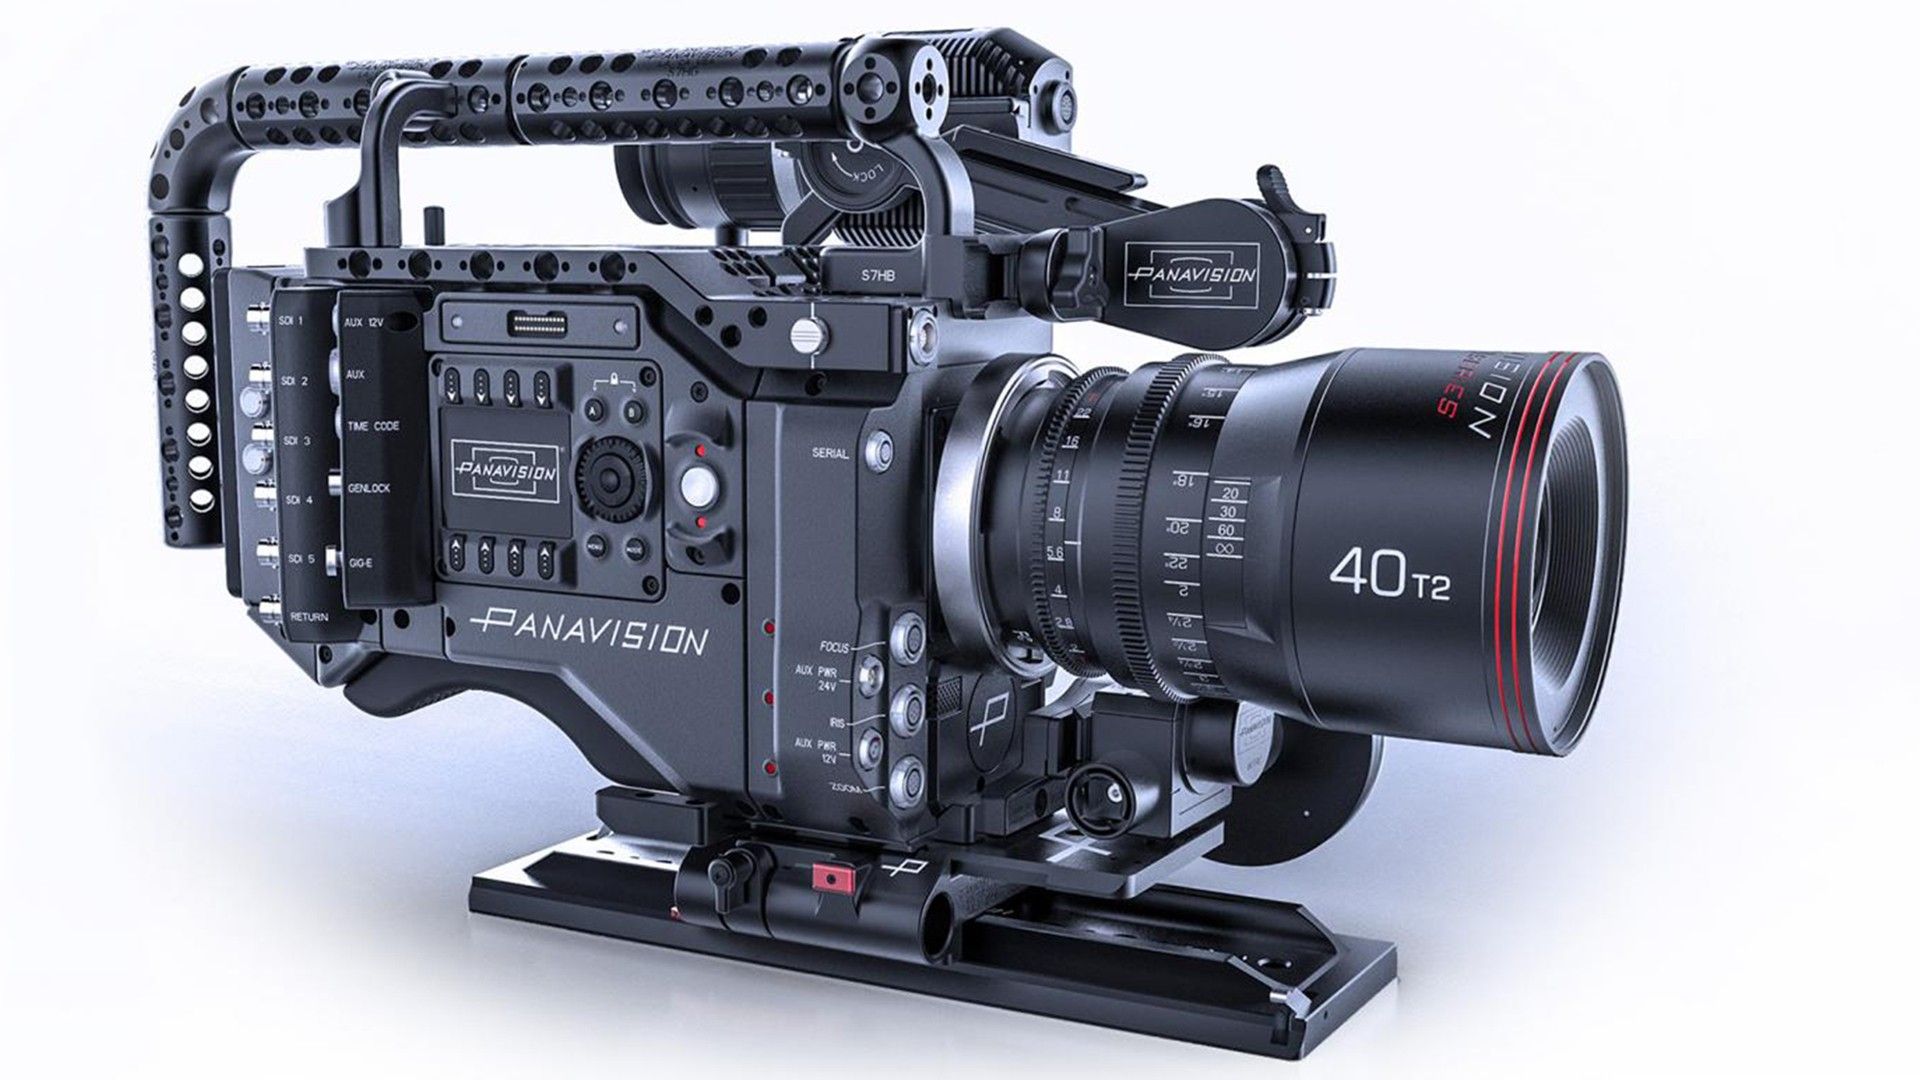 Panavison Co-Builds the World's Most Advanced Camera: 8K RAW DXL Cinema